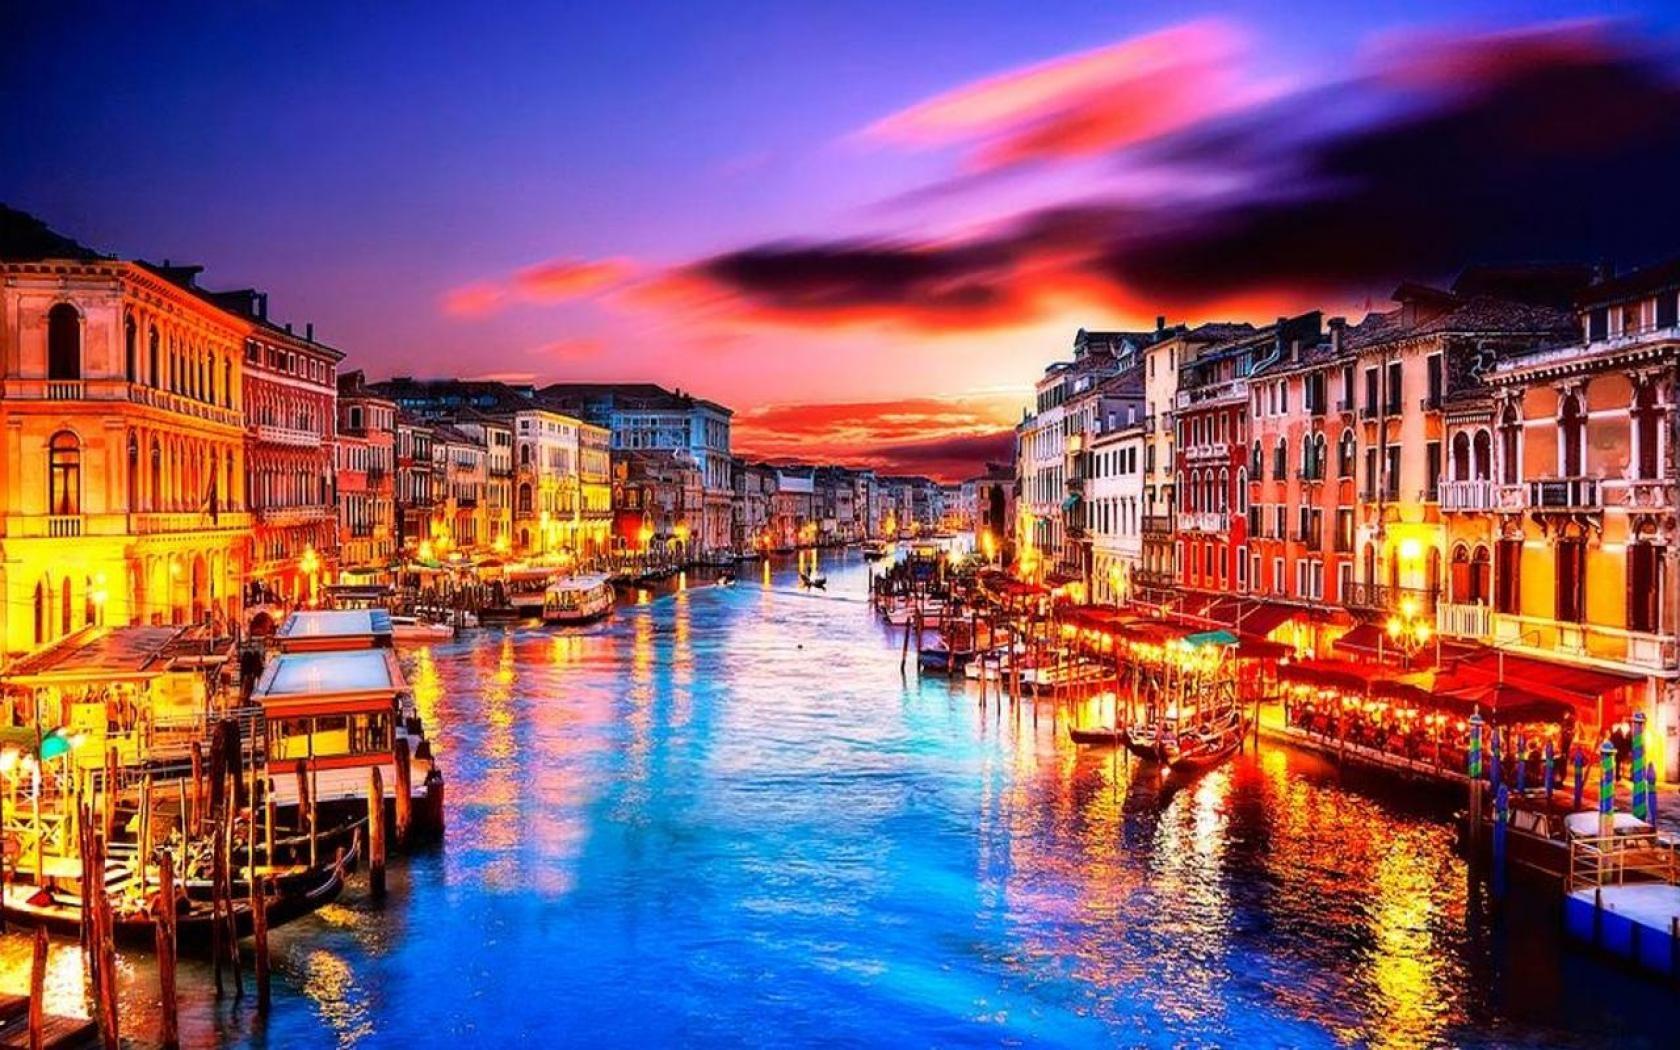 Venice River Wallpaper. Venice photo, Italy travel photography, Explore venice